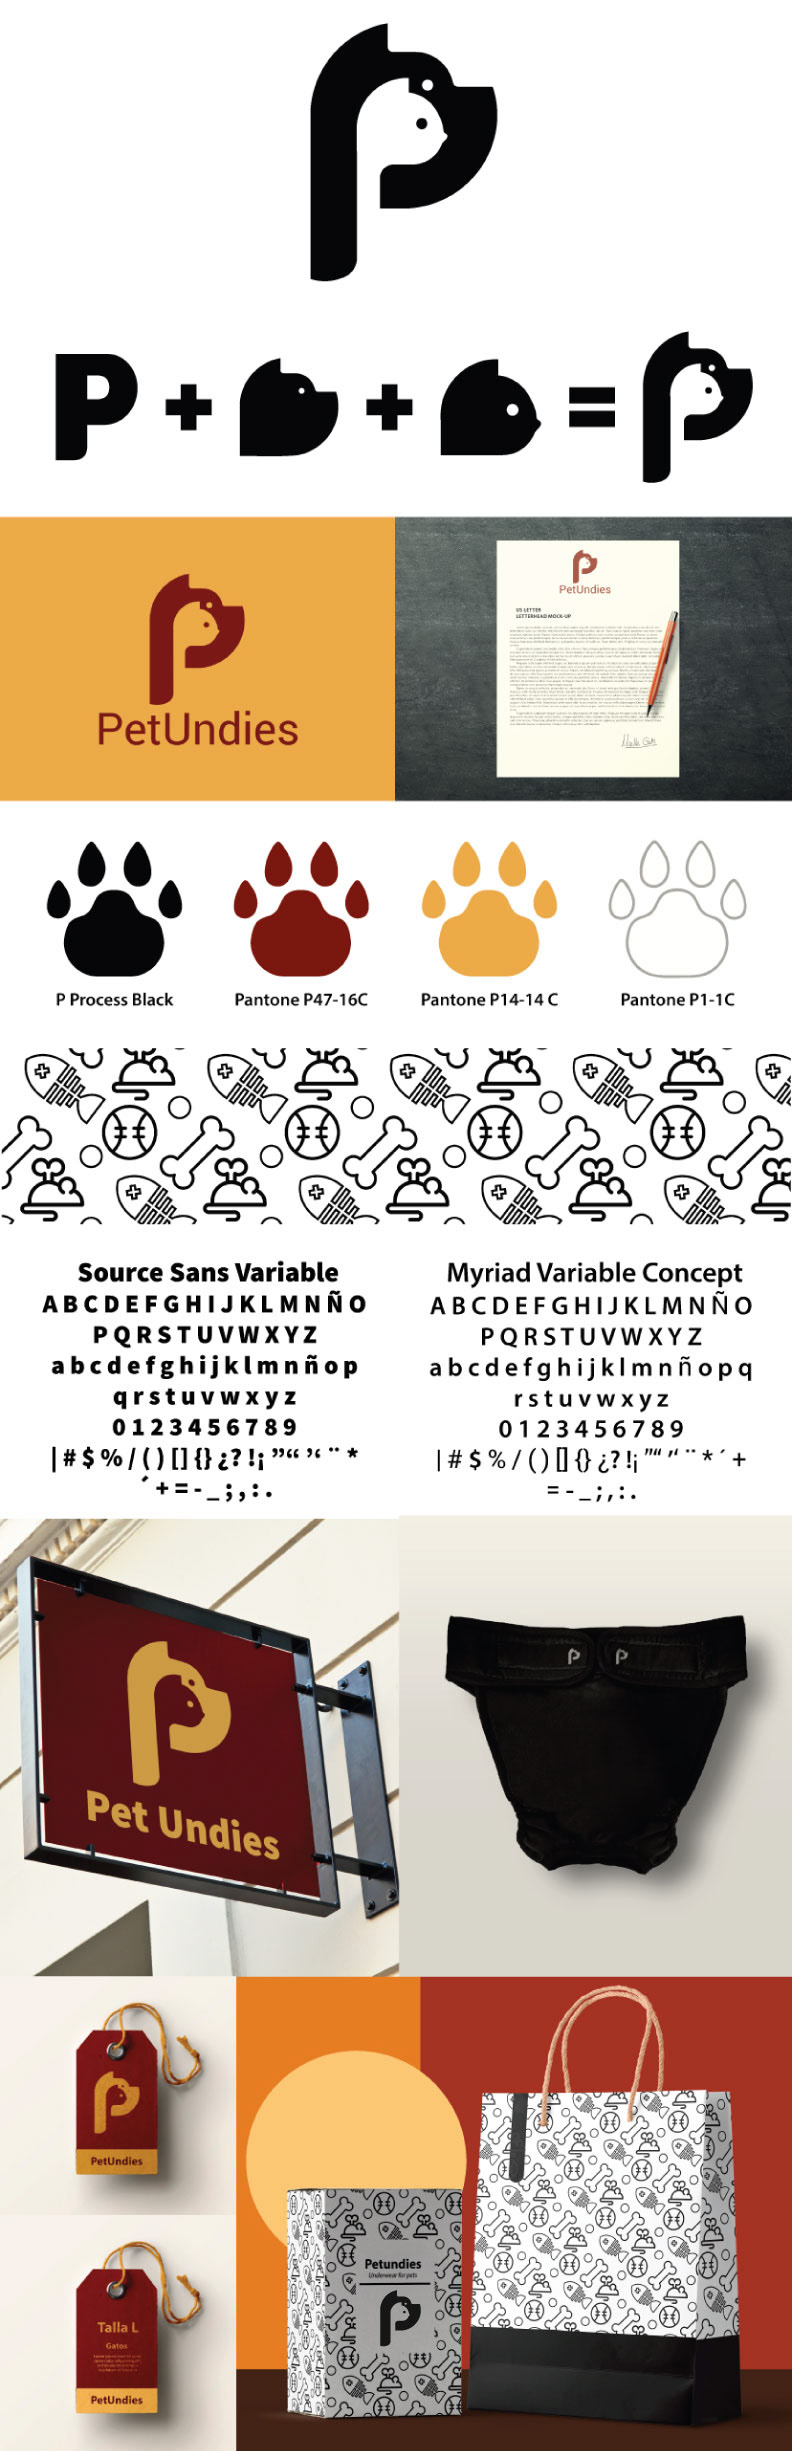 Cat dog logo Packaging pattern Pet product brand